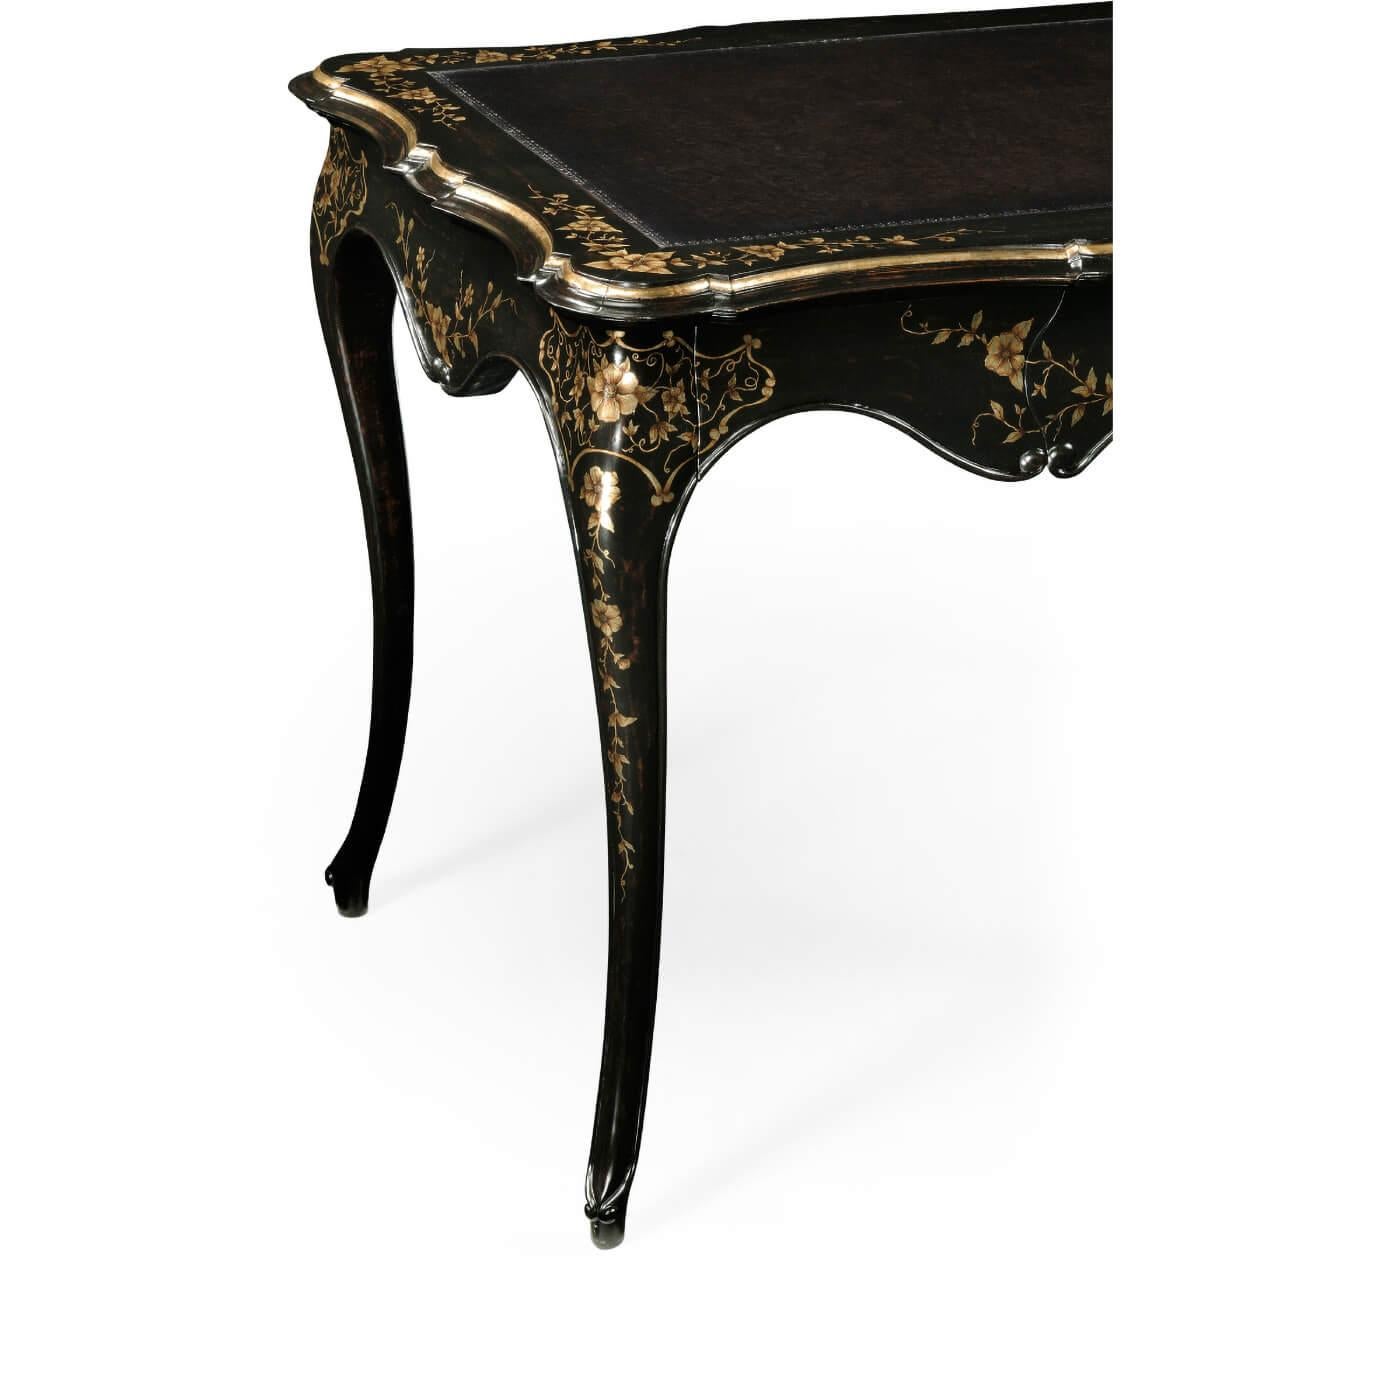 Contemporary English Rococo Painted Desk